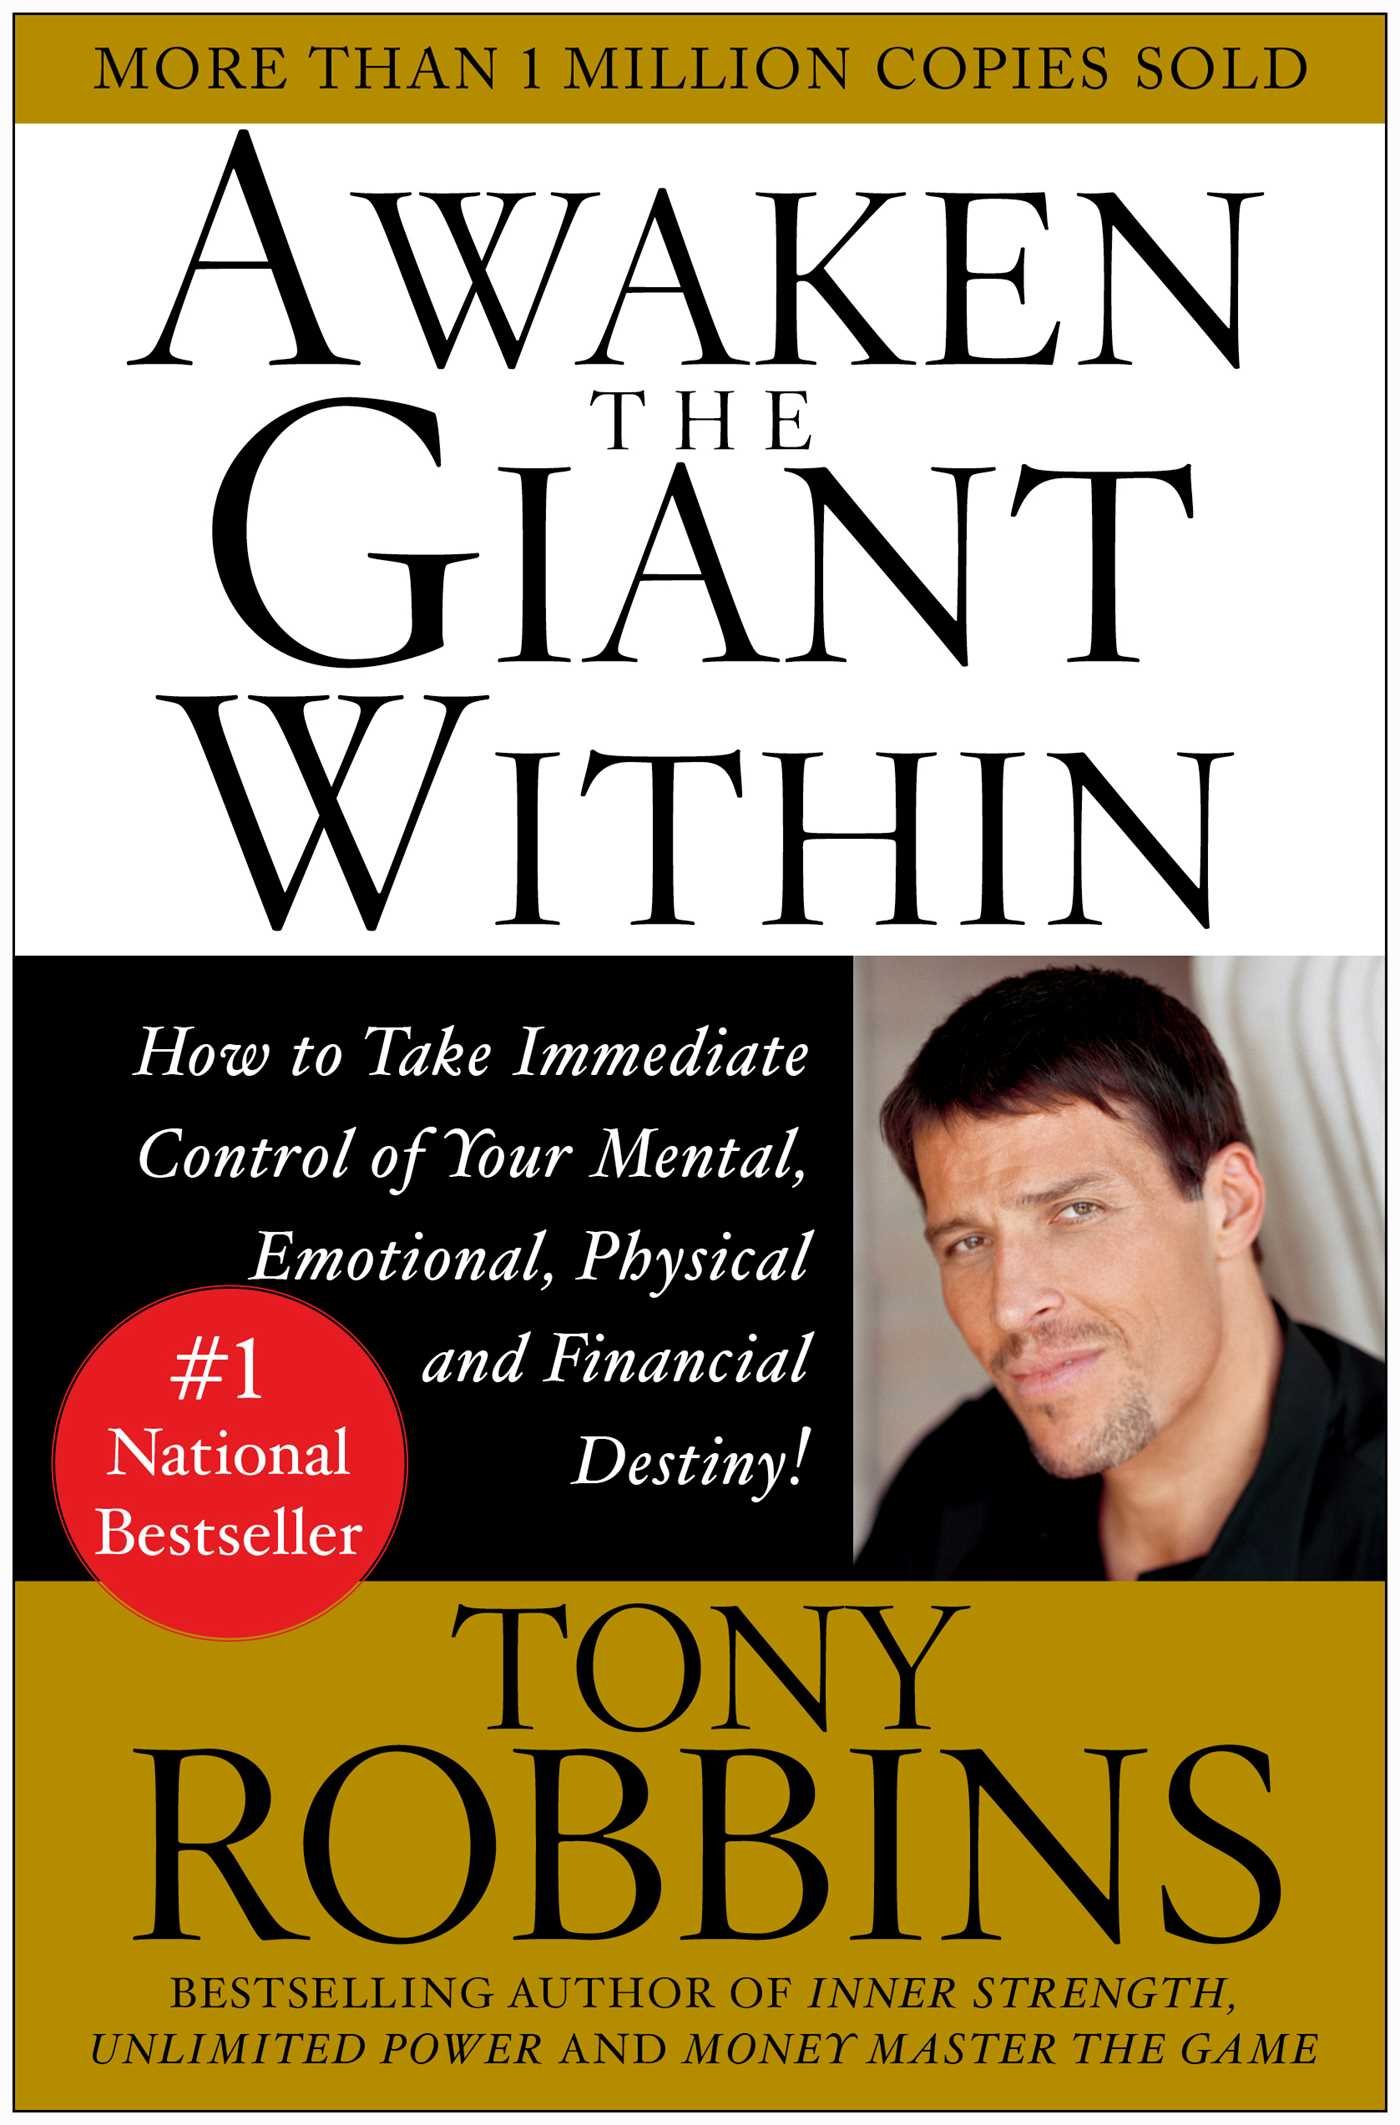 1. 'Awaken the Giant Within' by Tony Robbins